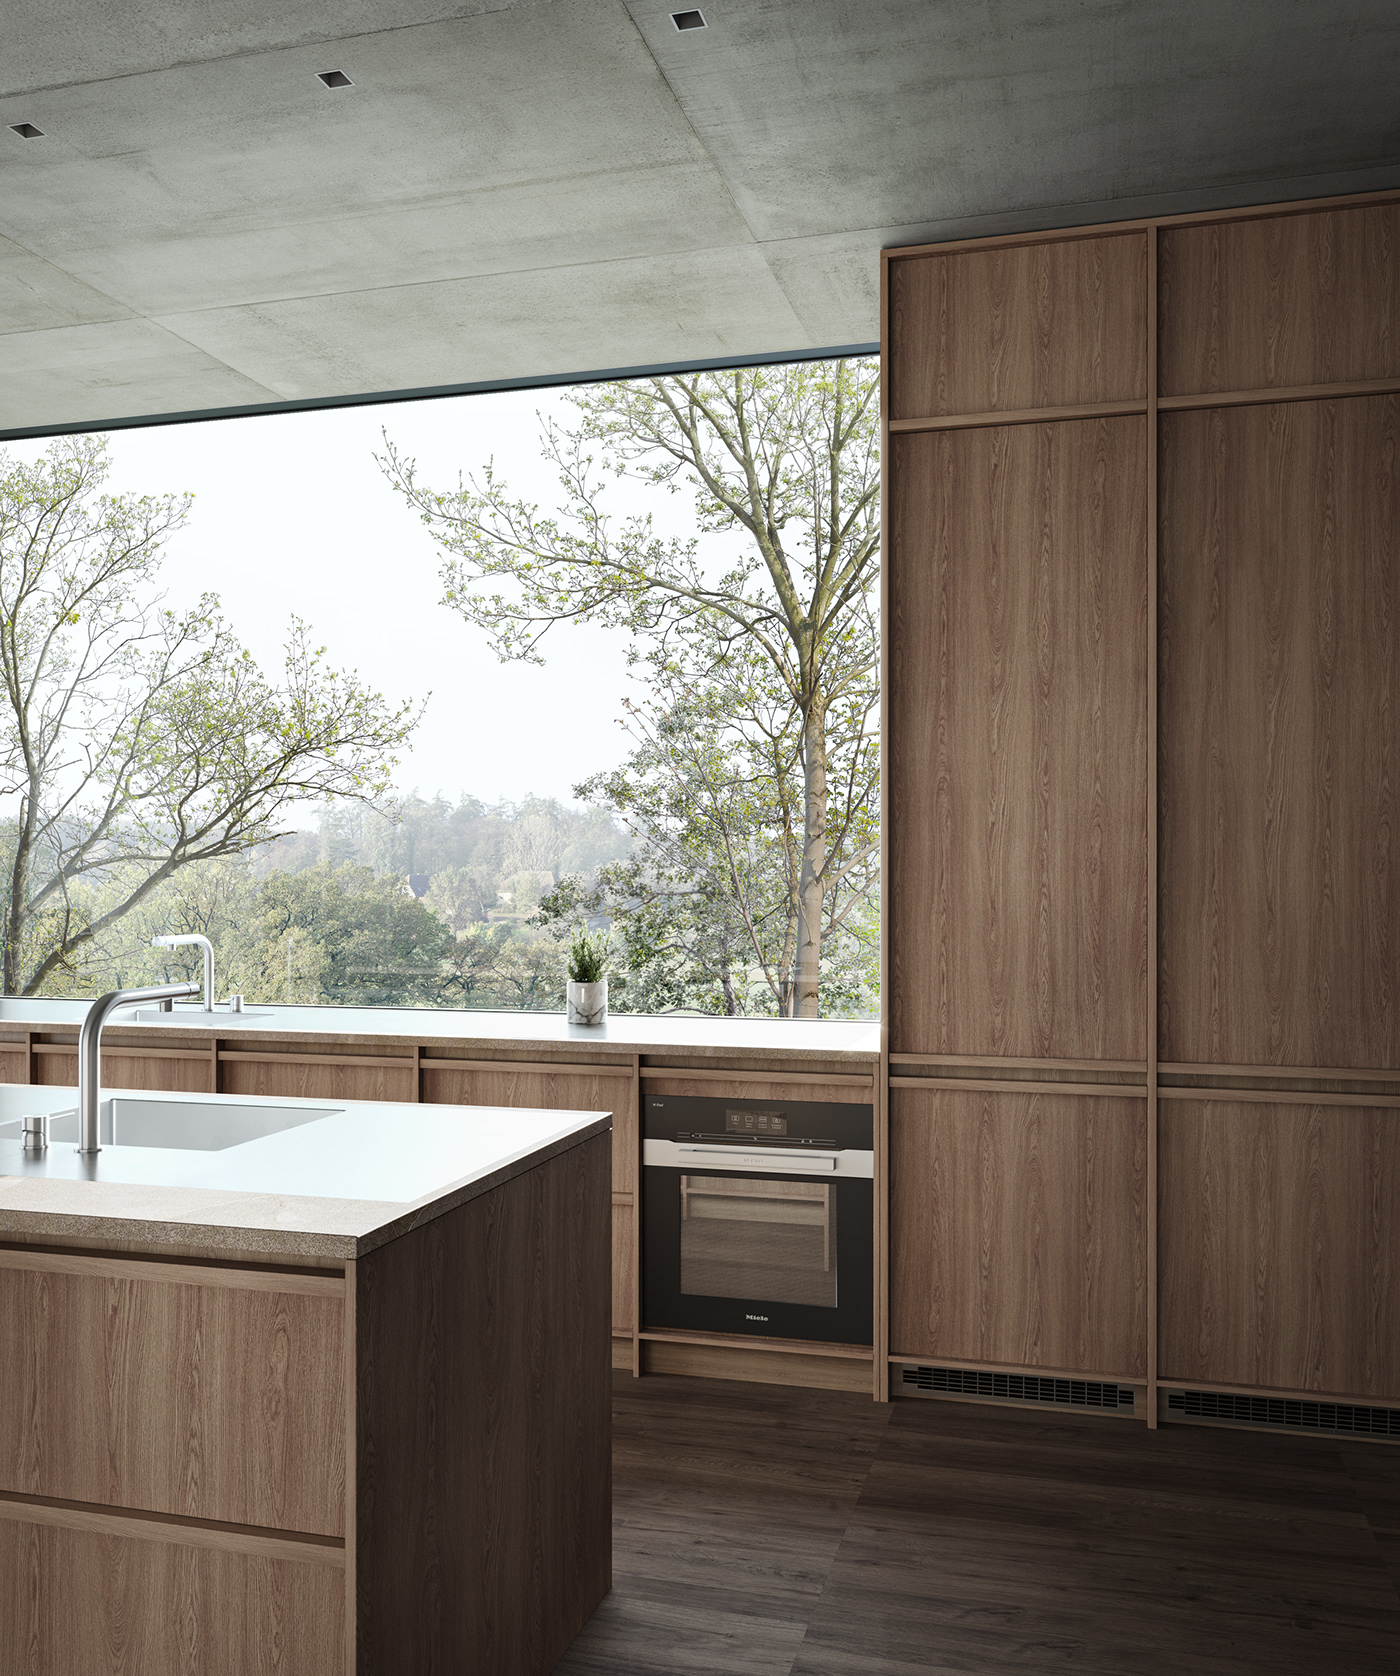 CGI interiordesign 3D kitchen design 3ds max visualization architecture archviz